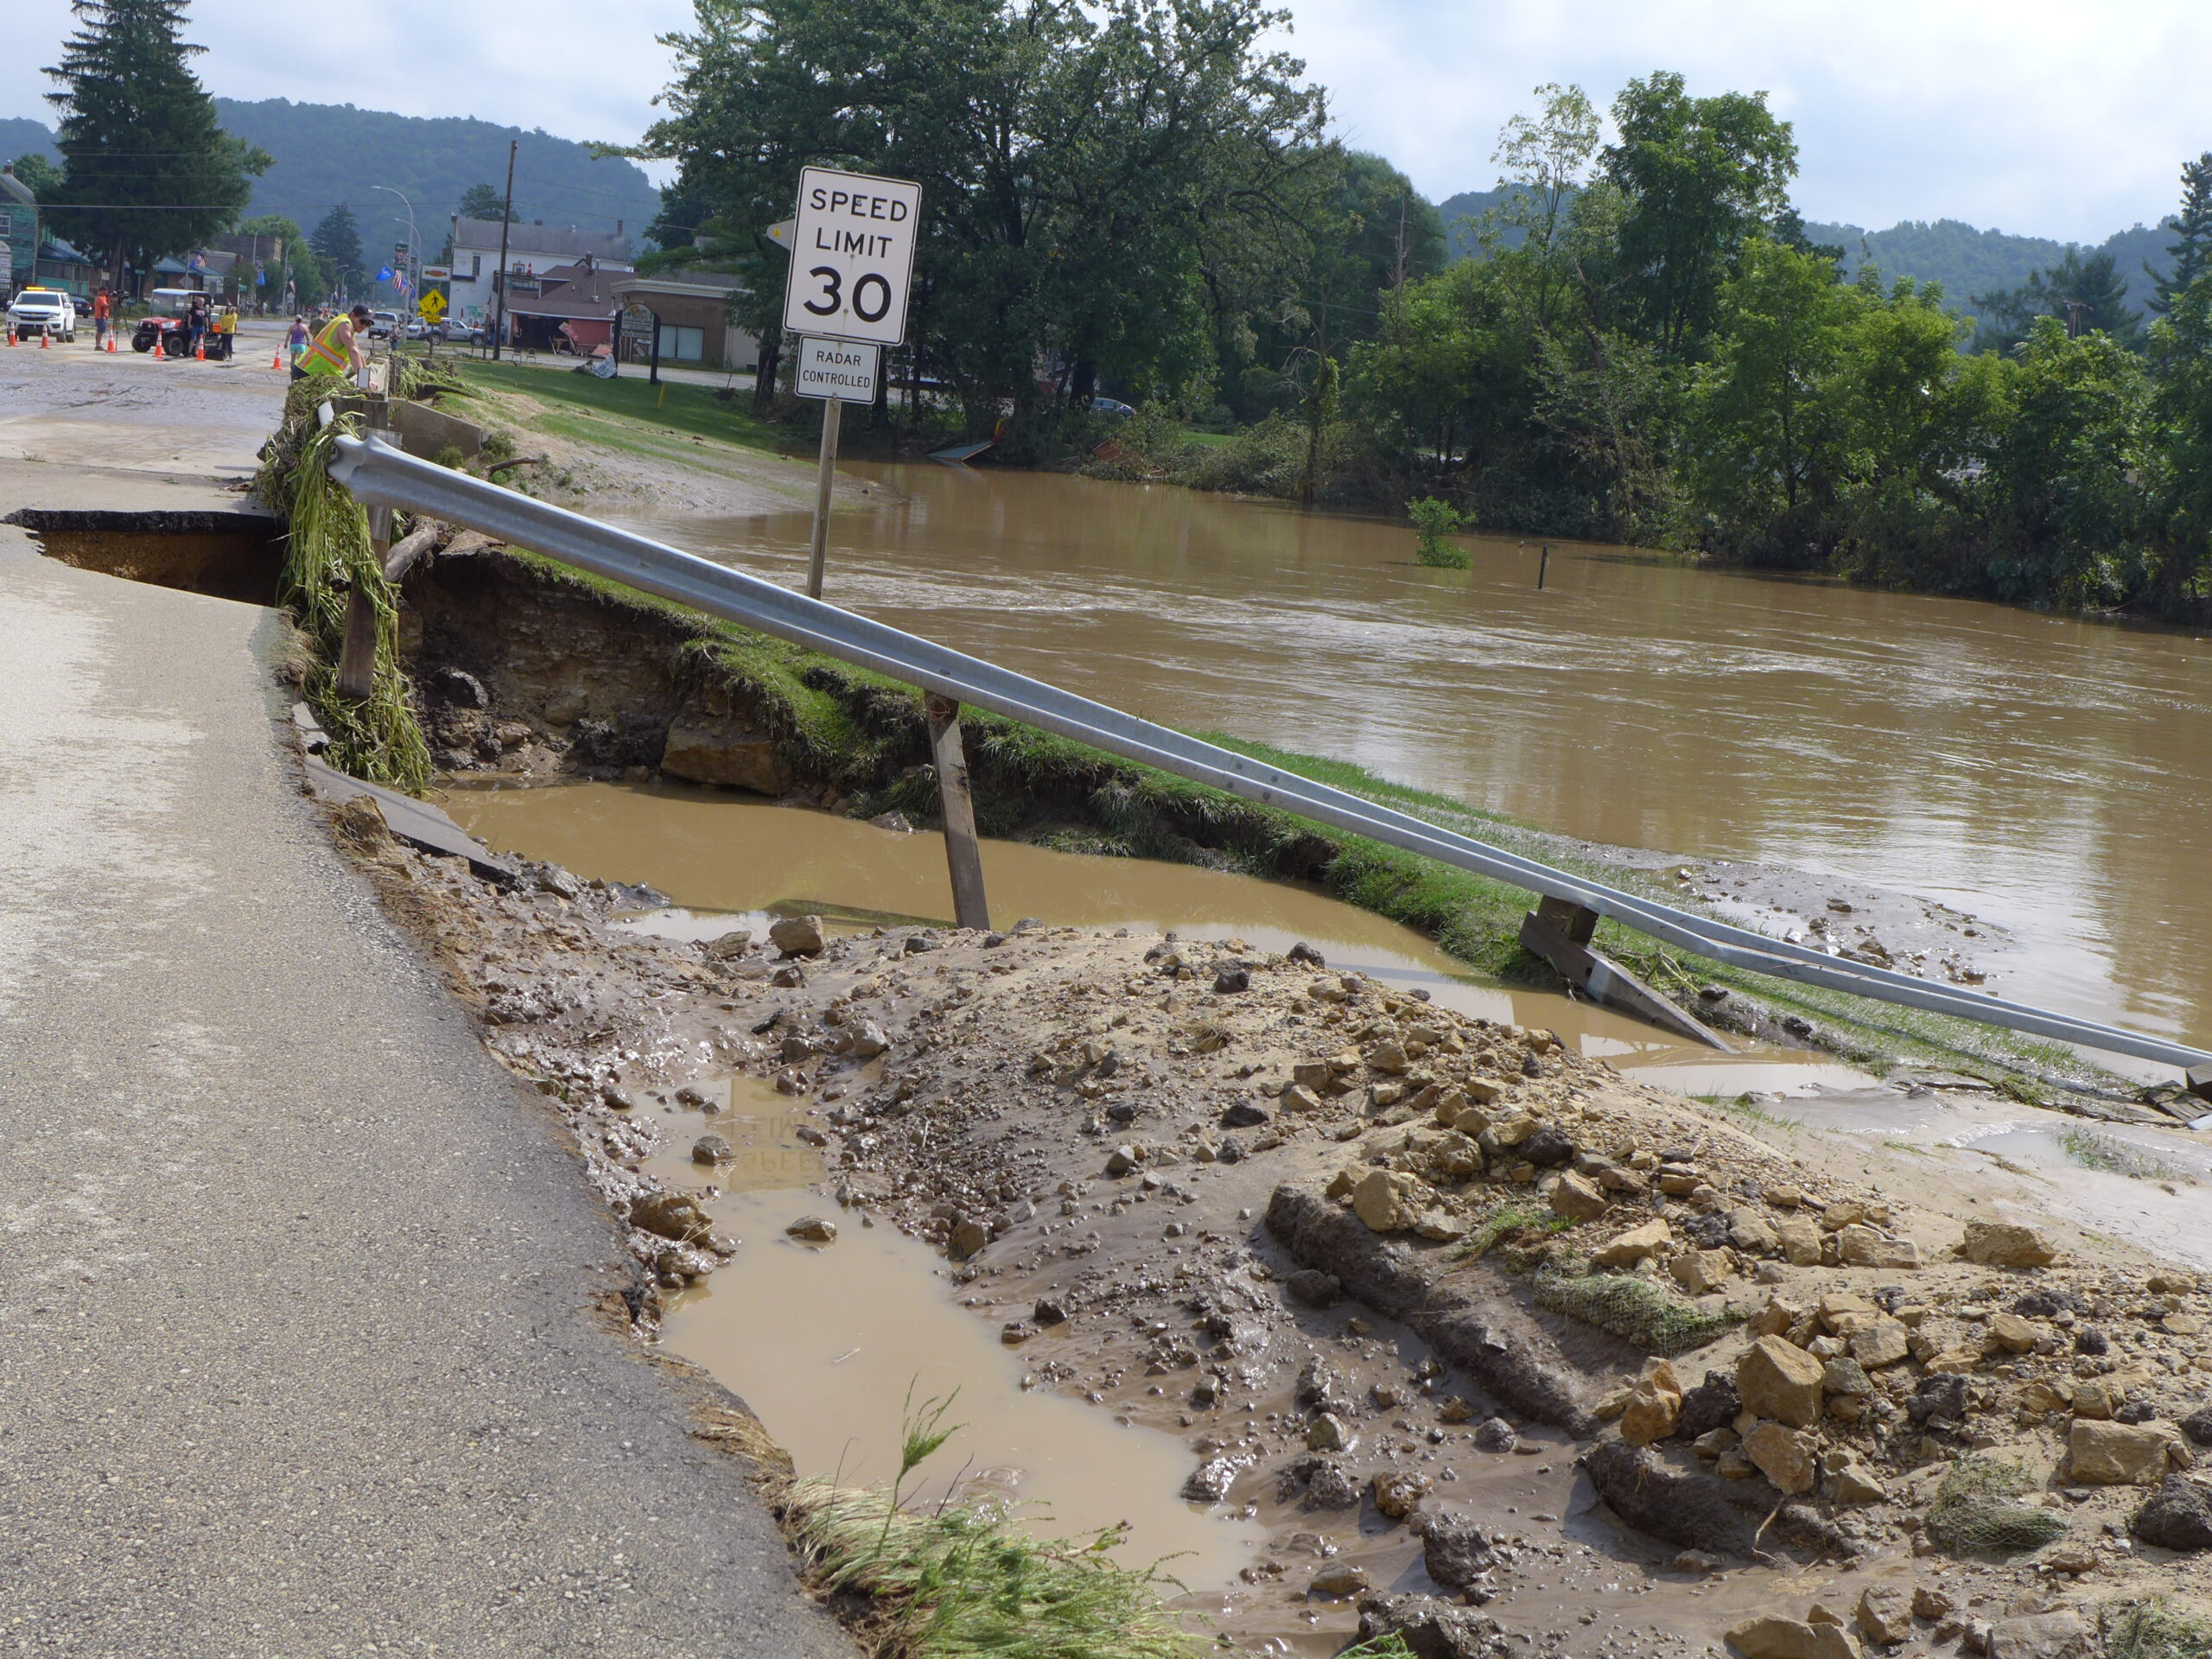 Walker Declares Statewide Emergency After Storms Ravage Communities